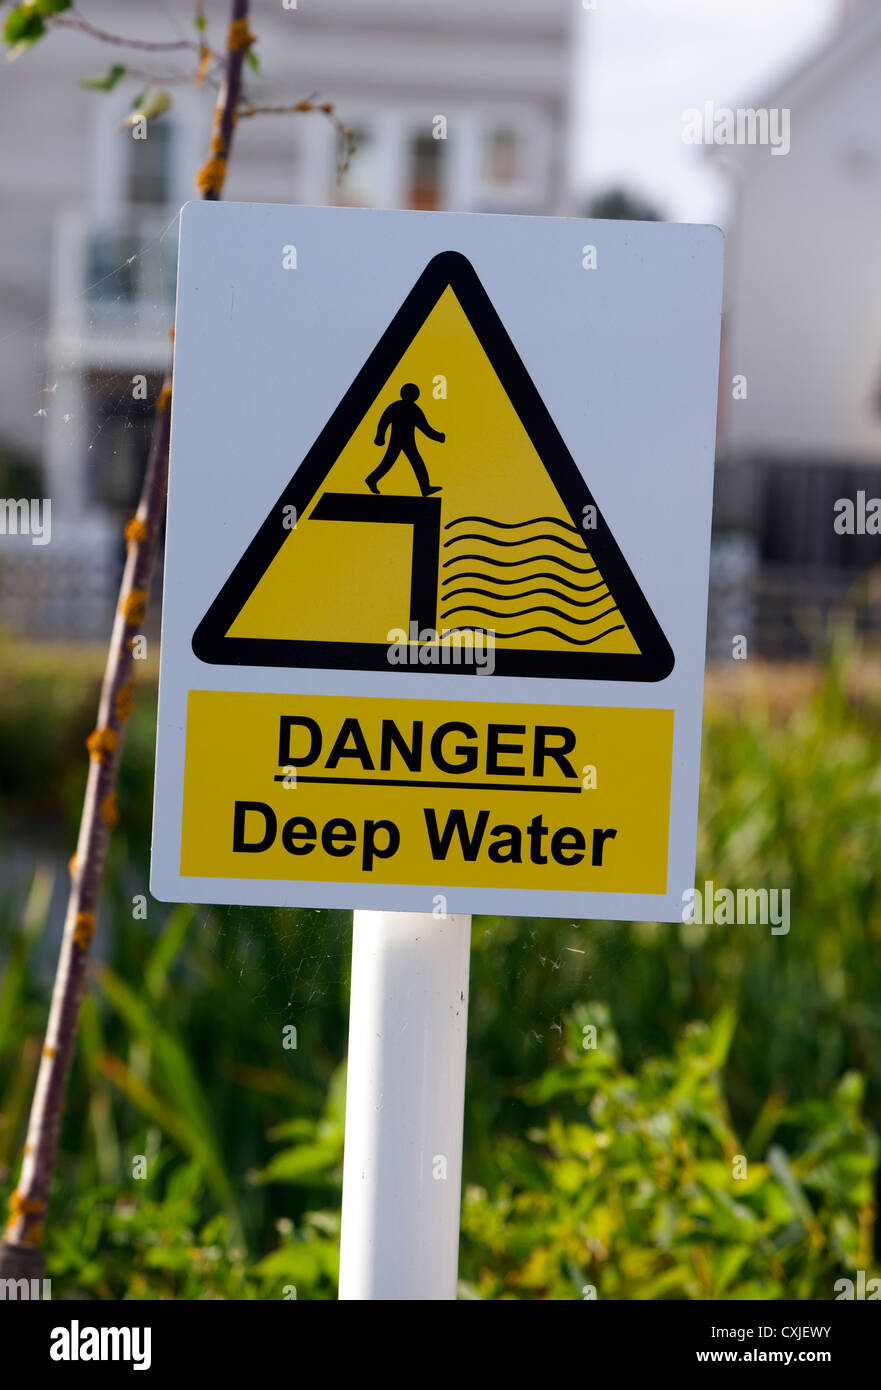 Danger deep water sign in Rye, East Sussex, UK Stock Photo